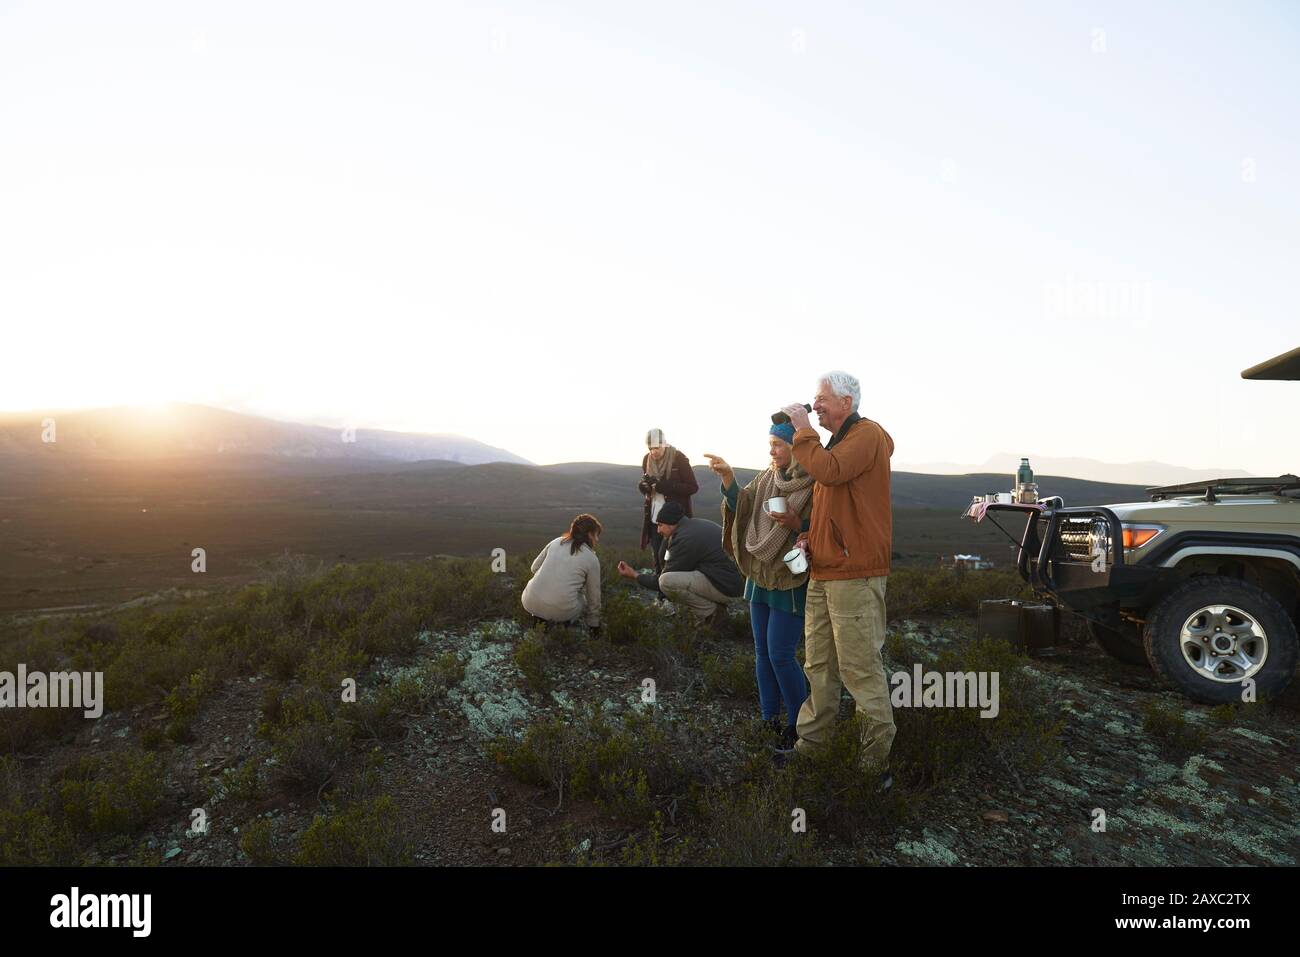 Safari tour group drinking tea and enjoying sunrise landscape view Stock Photo